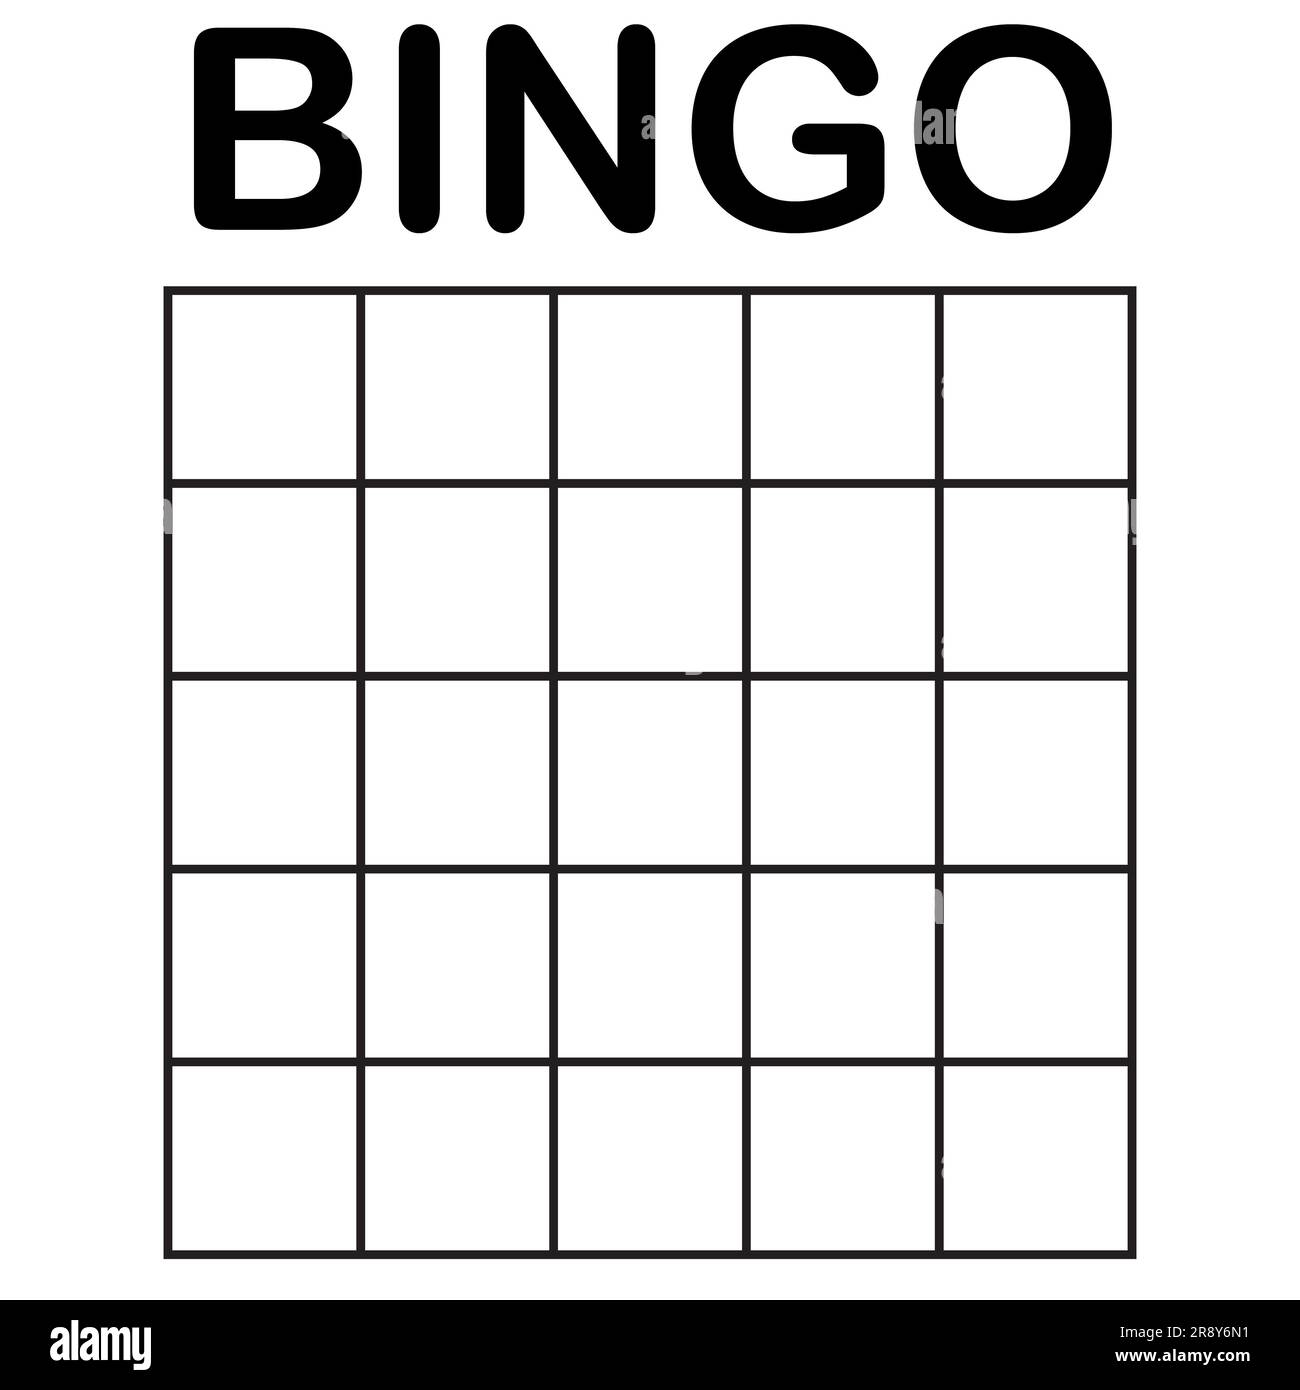 Clearance Archives - Bingo Supplies Ltd